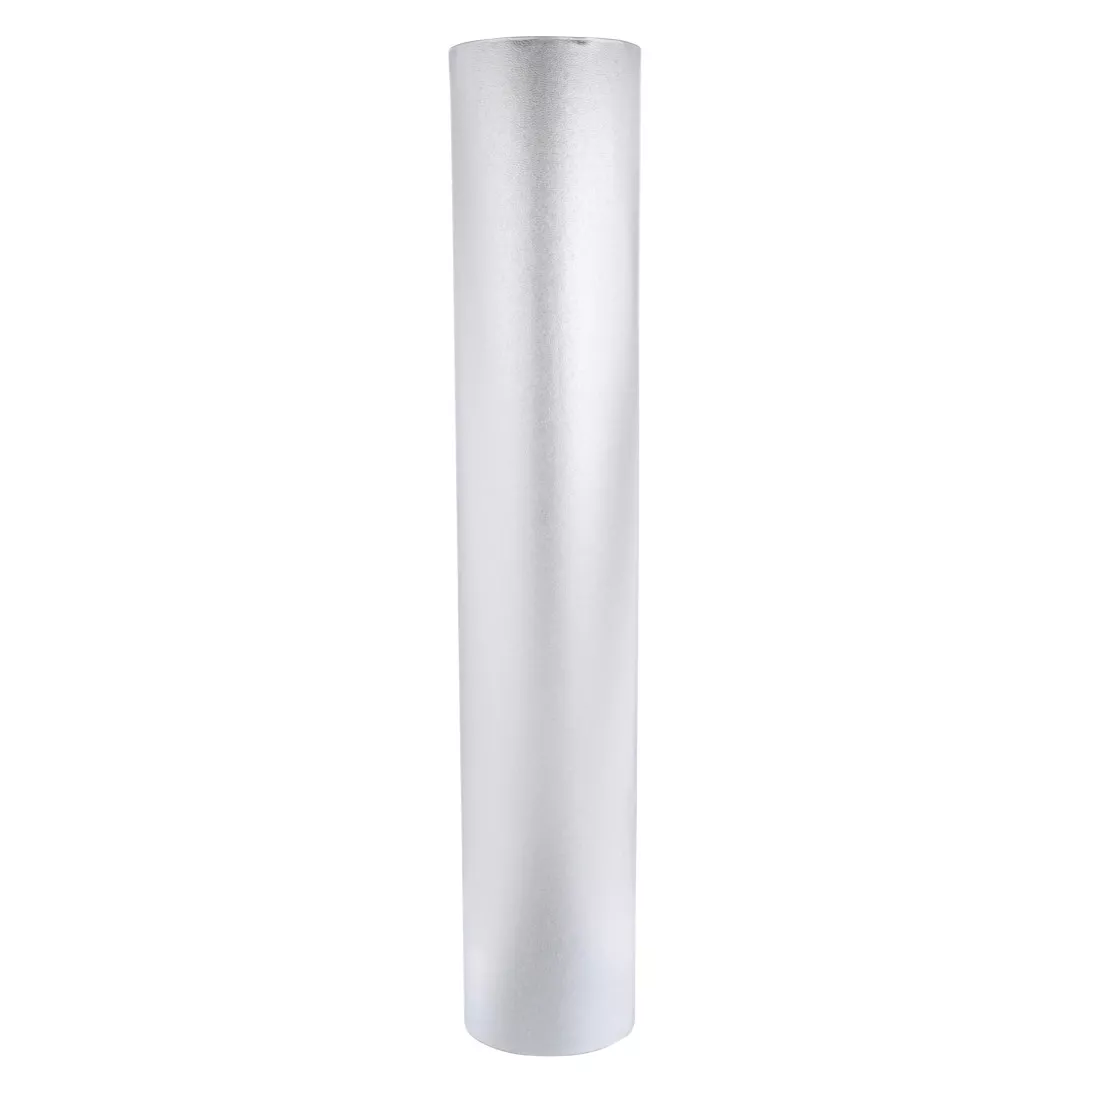 3M™ VentureClad™ Insulation Jacketing Tape 1577CW-E, Silver, 35 1/2 in x
50 yd, 1 roll per case